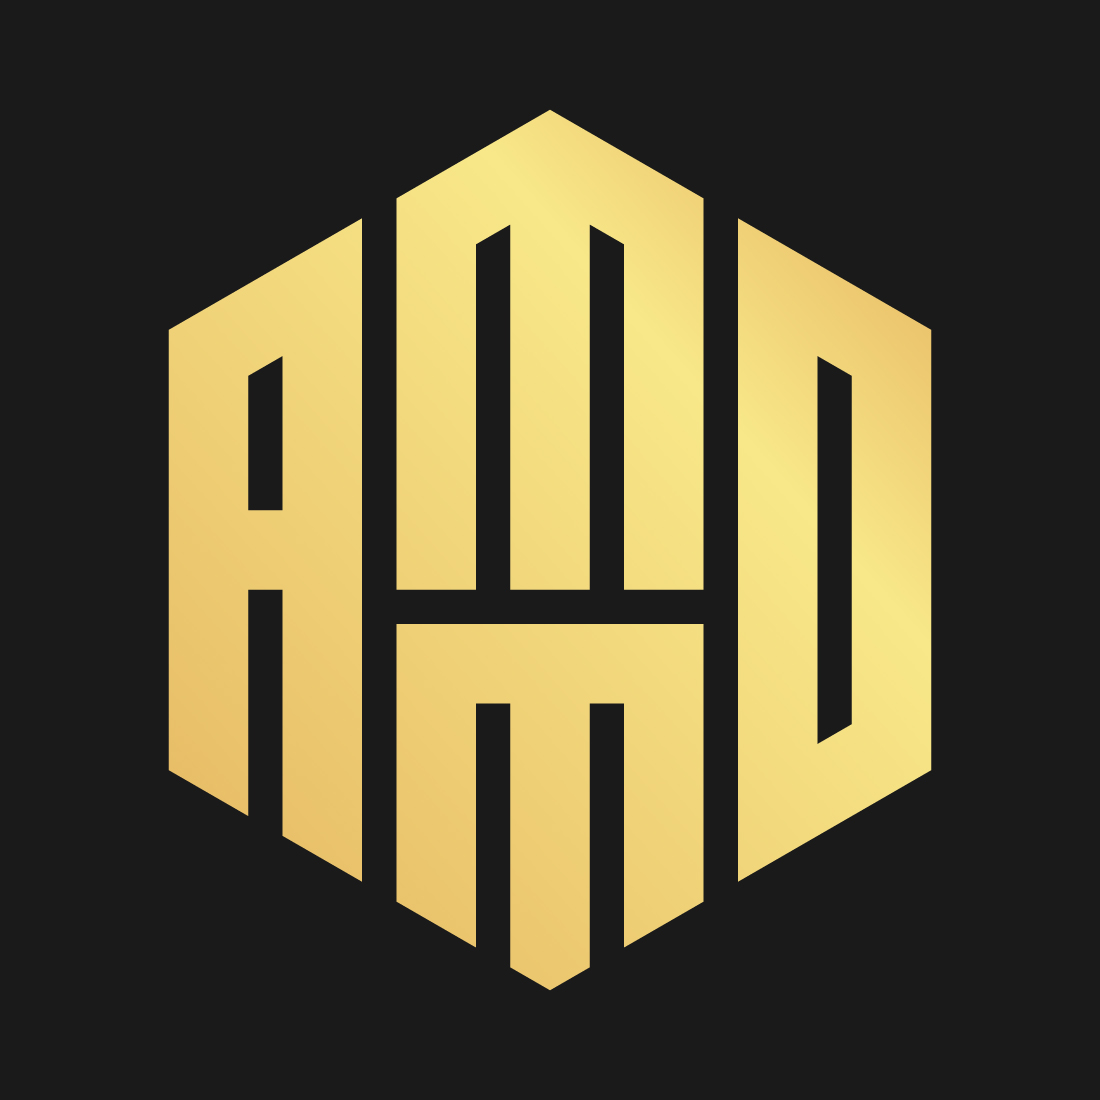 AMMO logo design cover image.